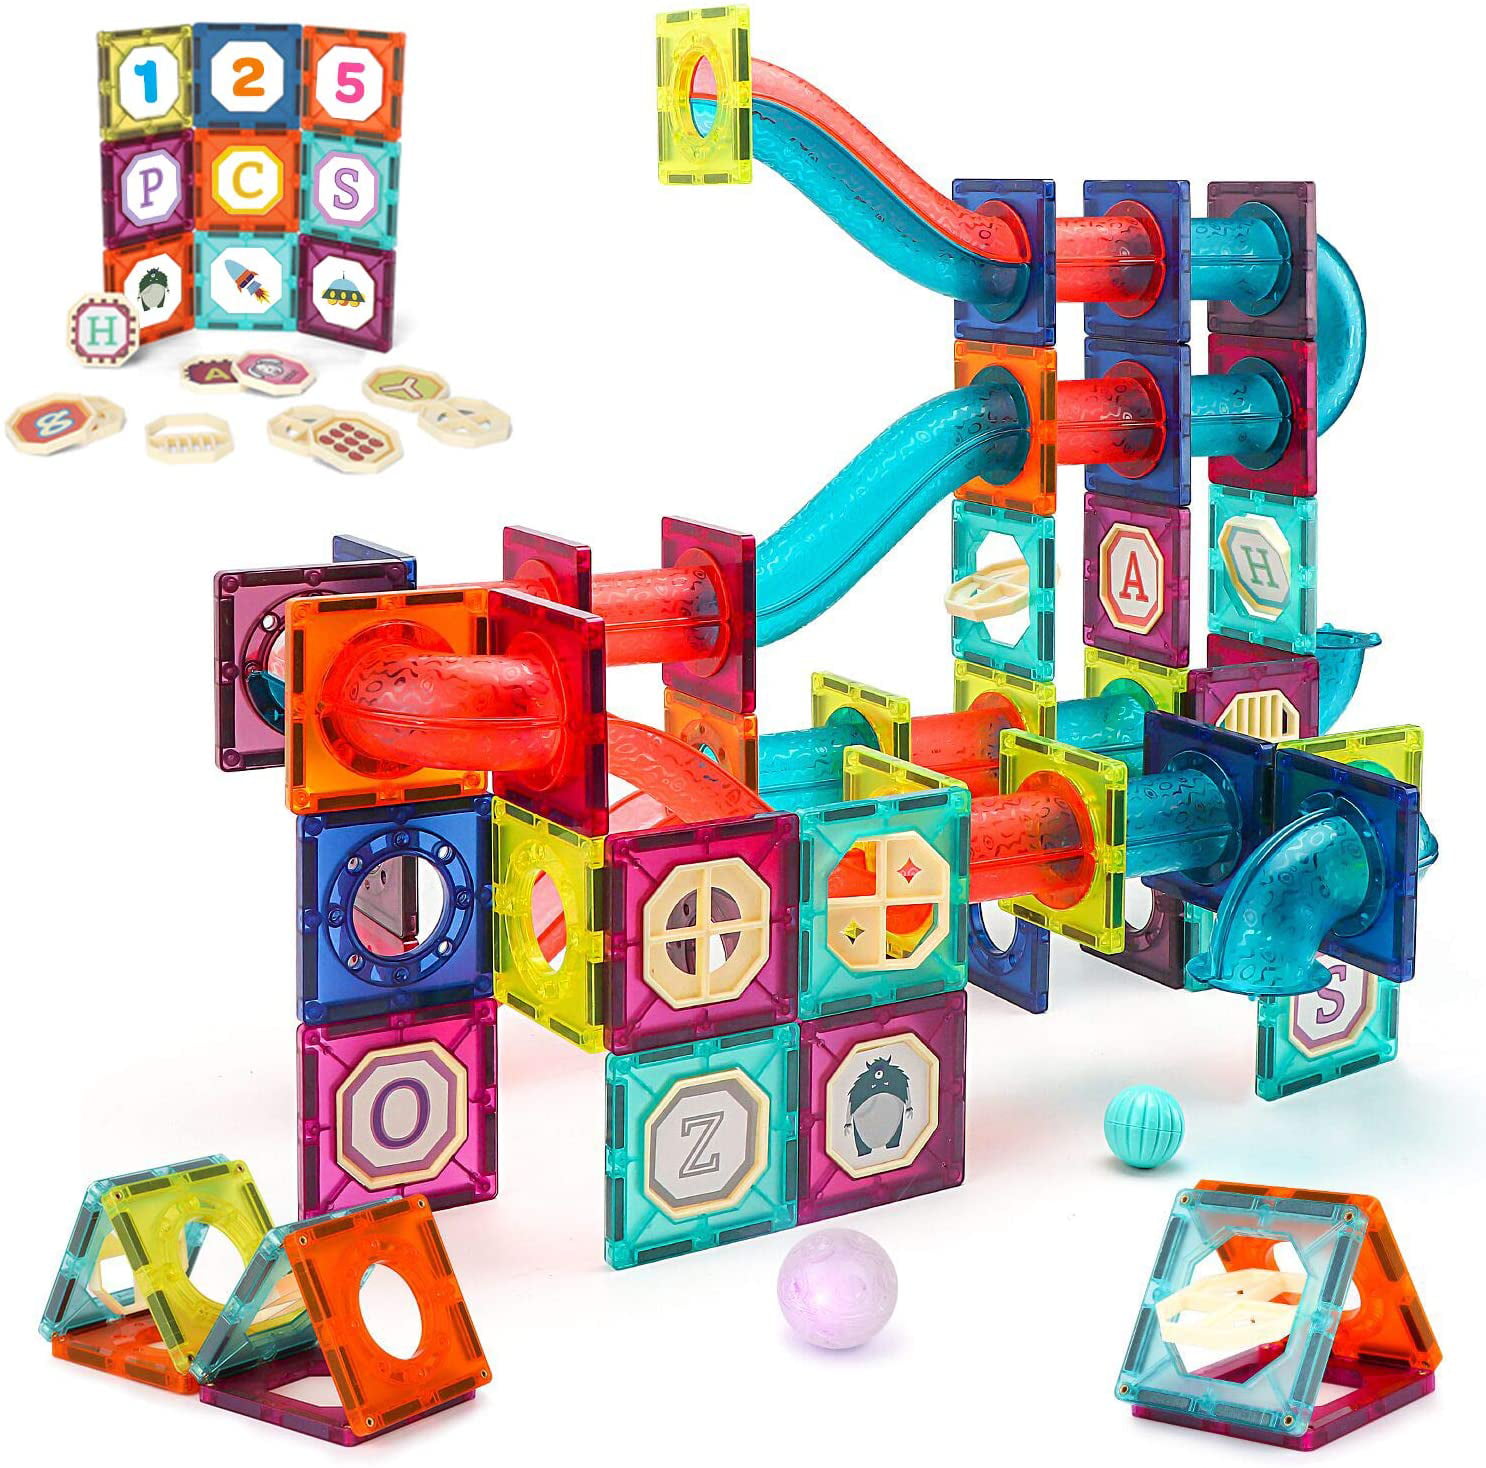 US SELLER Gift For Children Age 3 Educational Magnetic 120pc Building Blocks 